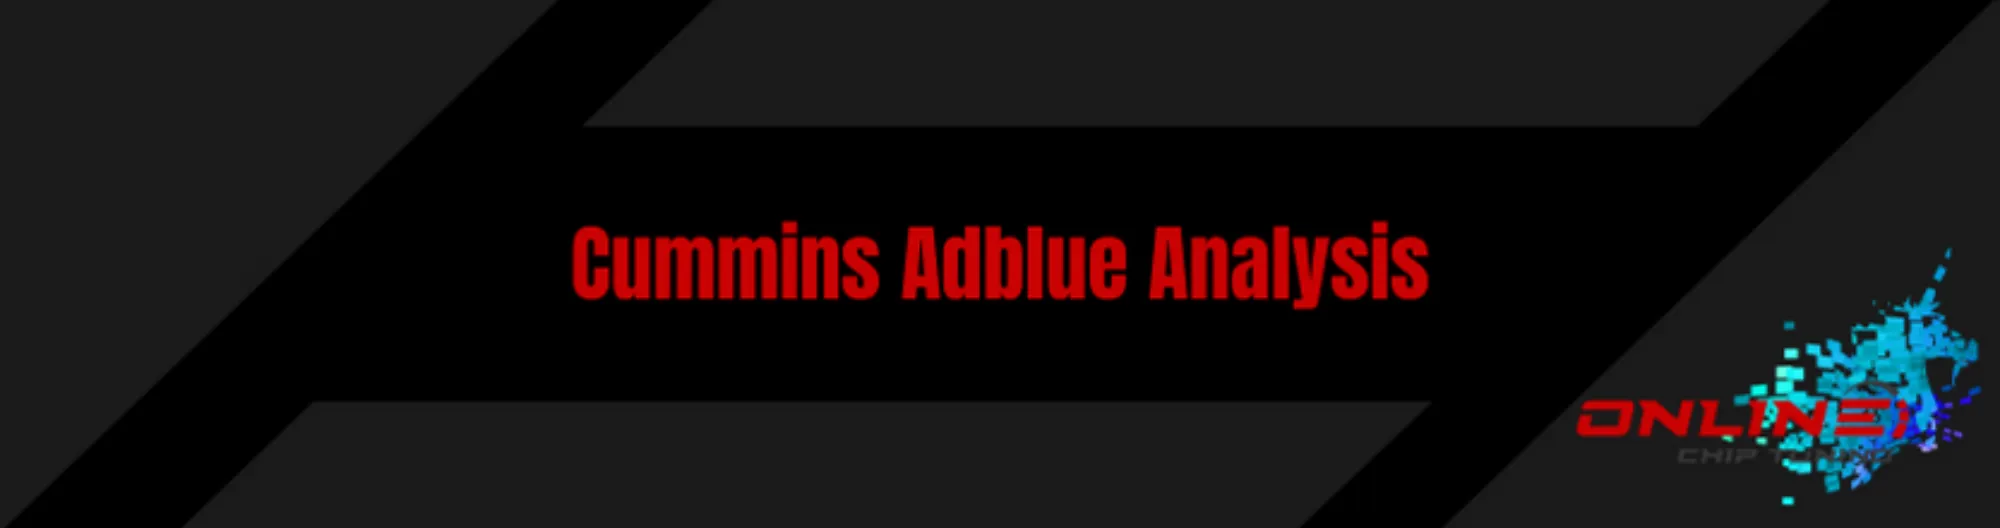 Cummins Adblue Analysis